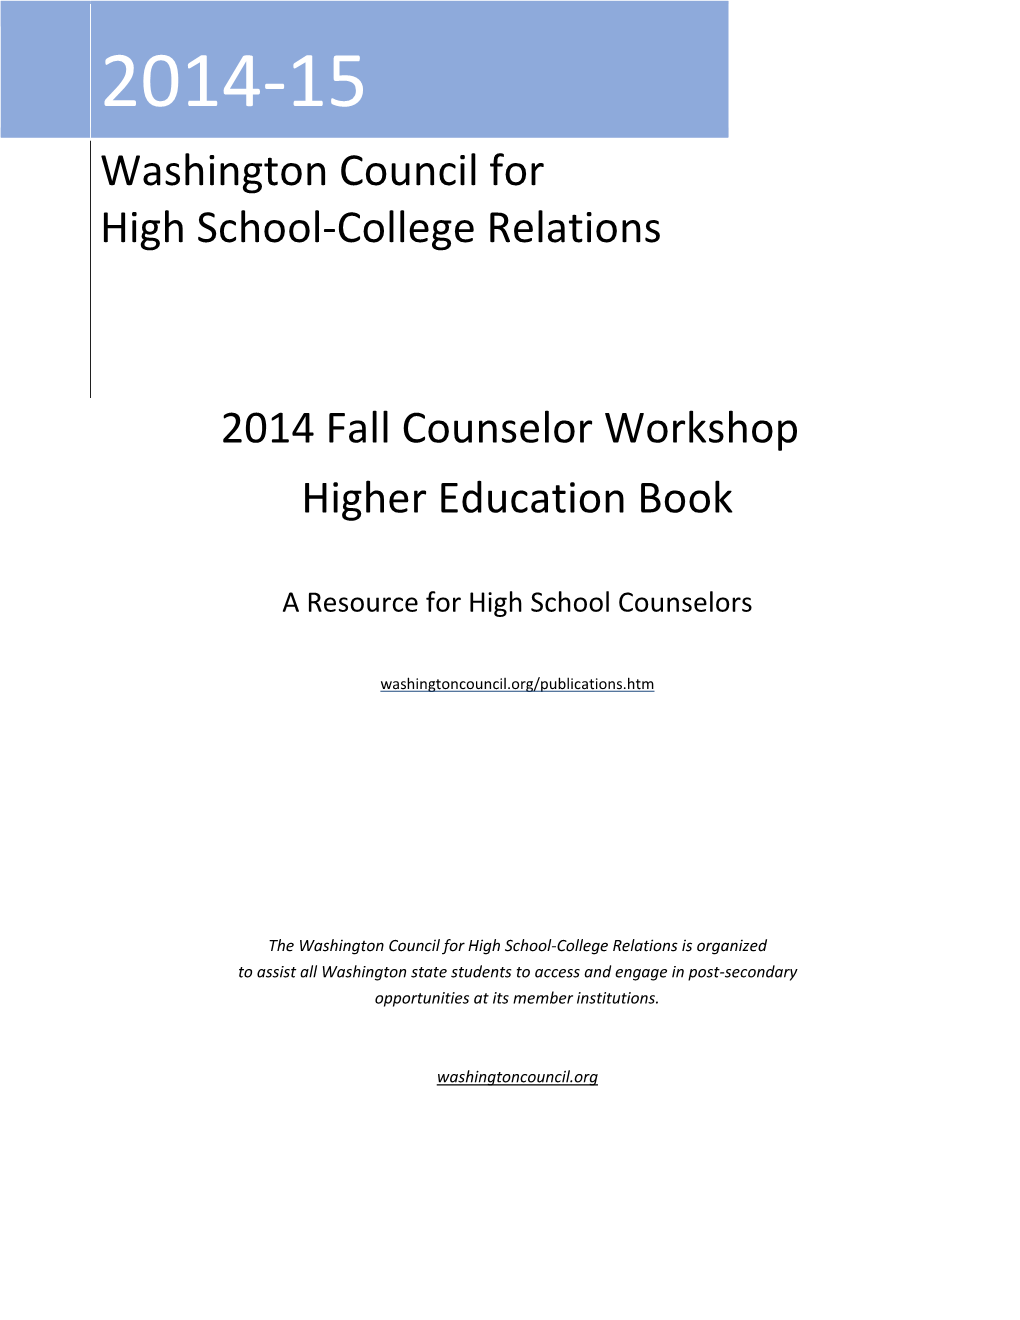 2014 Fall Counselor Workshop Higher Education Book Washington